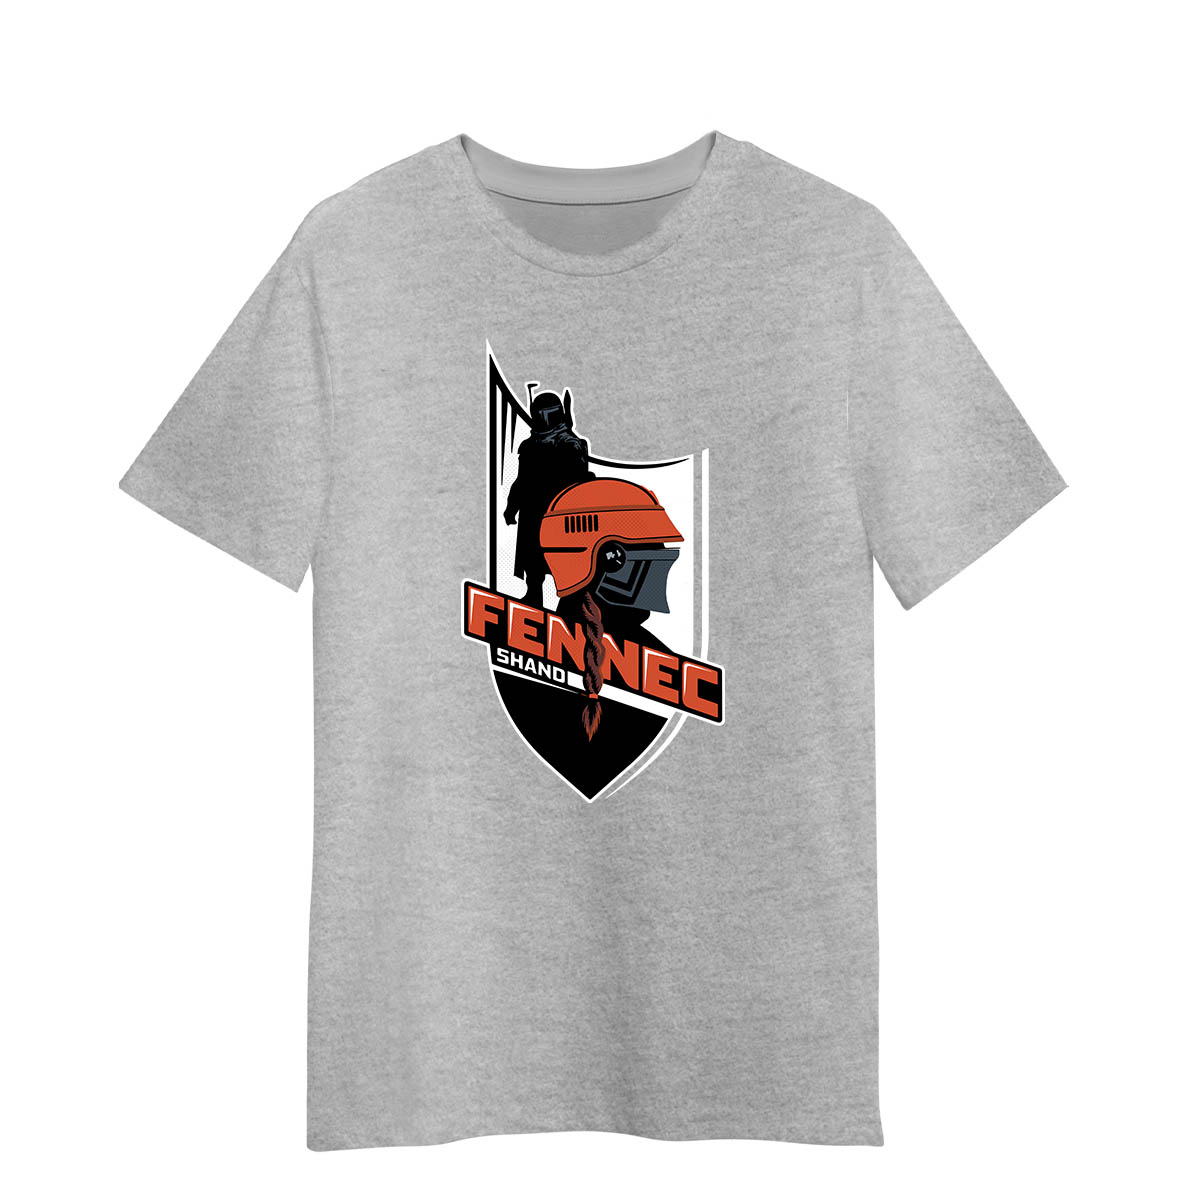 Fennec Shand  Boba Fett Star Wars Universe Adult Unisex T-Shirt